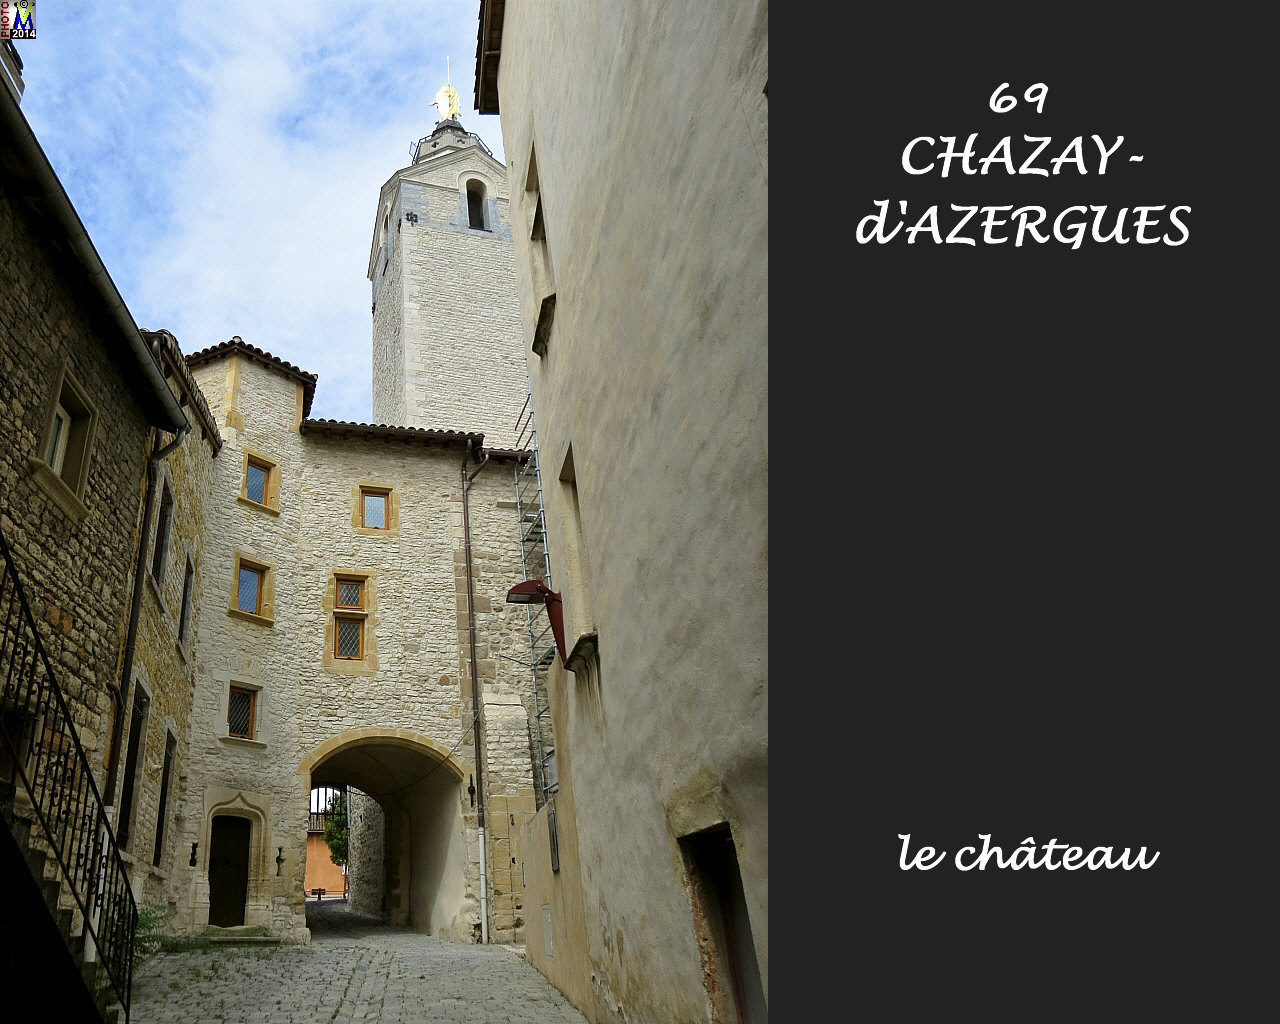 69CHAZAY-AZERGUES_chateau_114.jpg